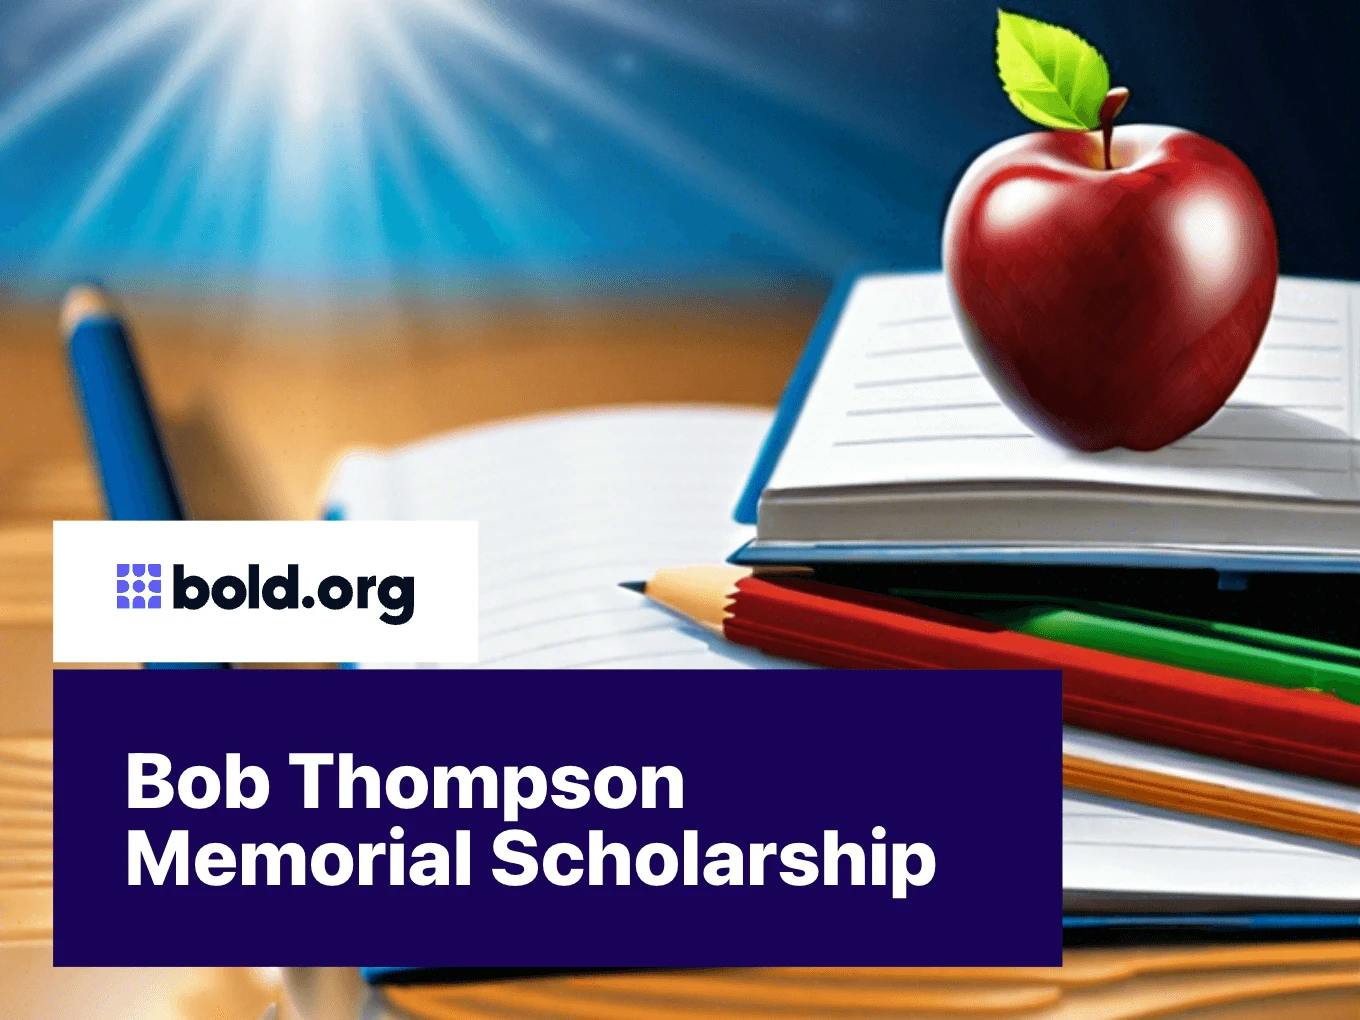 Bob Thompson Memorial Scholarship